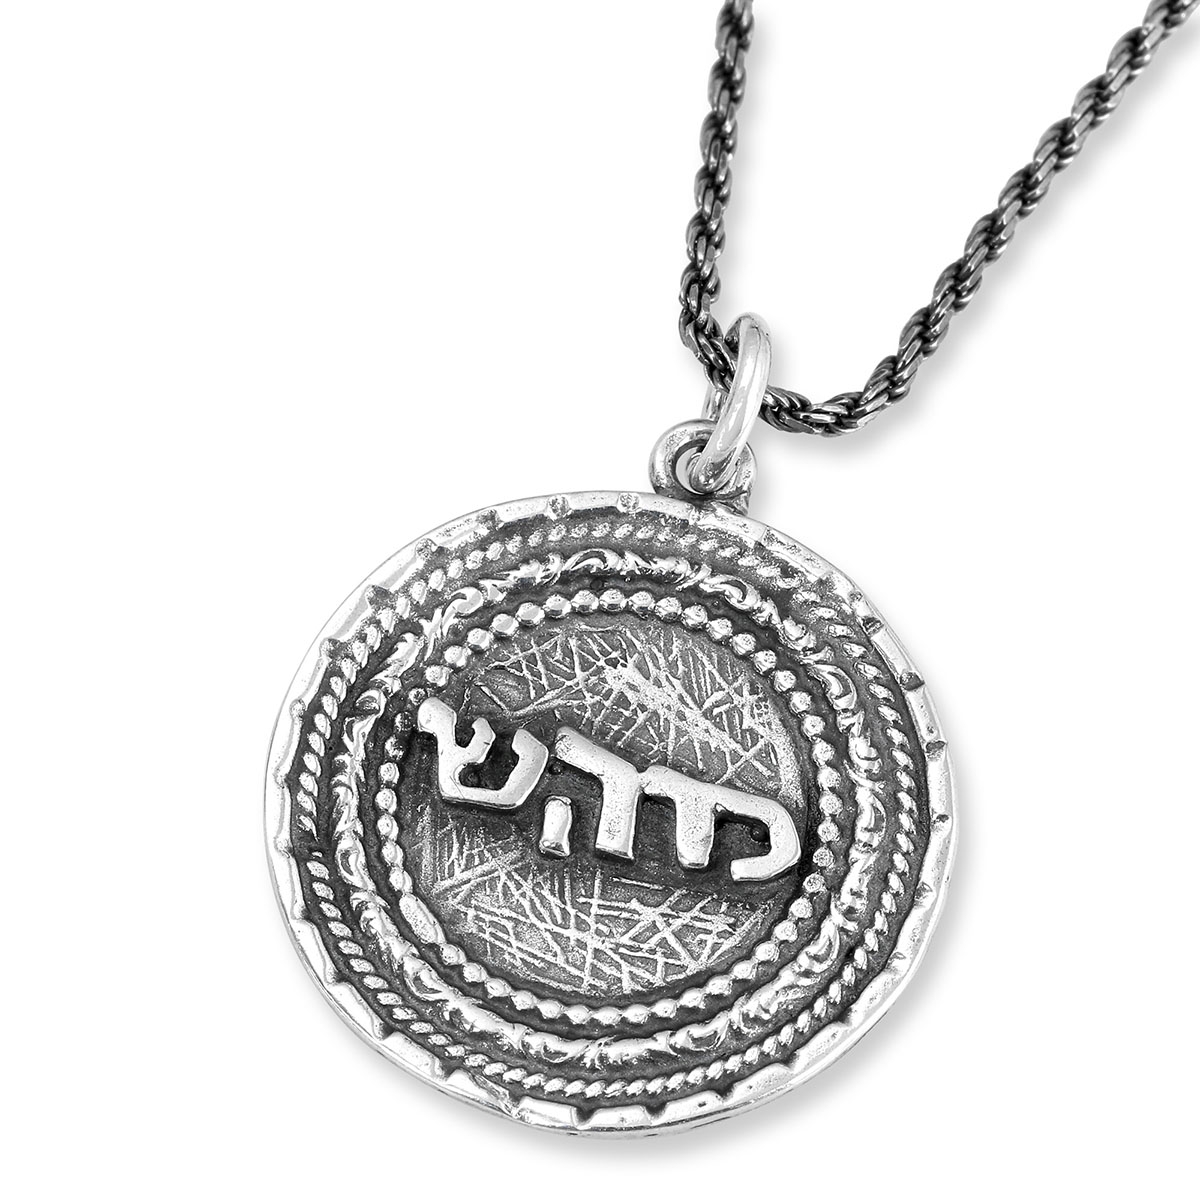 Handcrafted 925 Sterling Silver Kabbalah Disk Pendant – Healing - 1